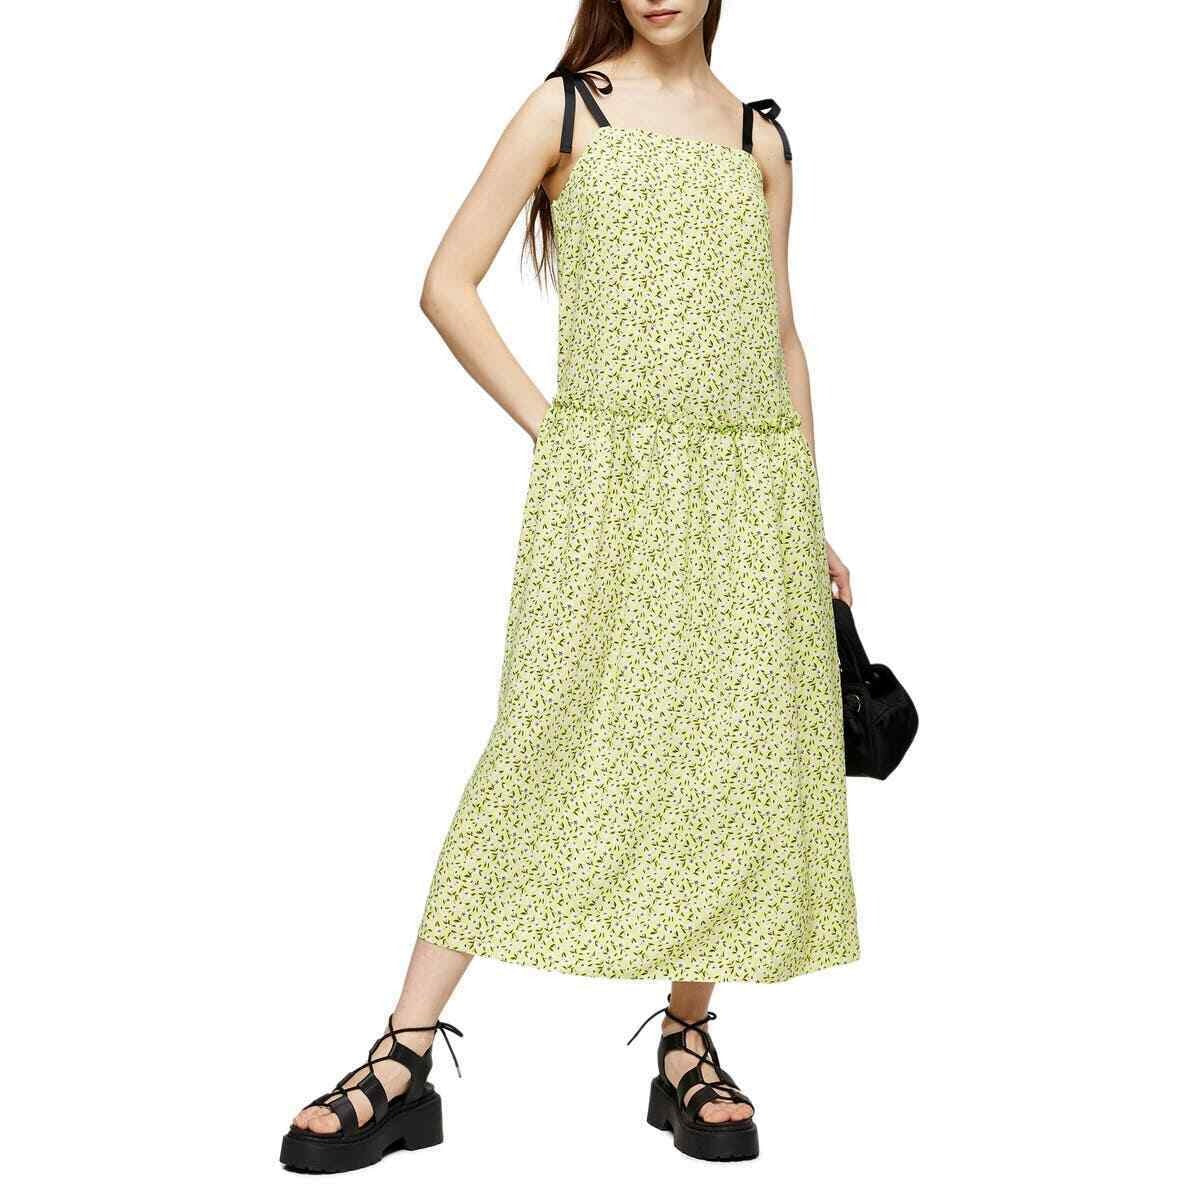 NWT Women's Topshop Floral Print Drop Waist MIDI Dress, Size 8 US - Lime Green